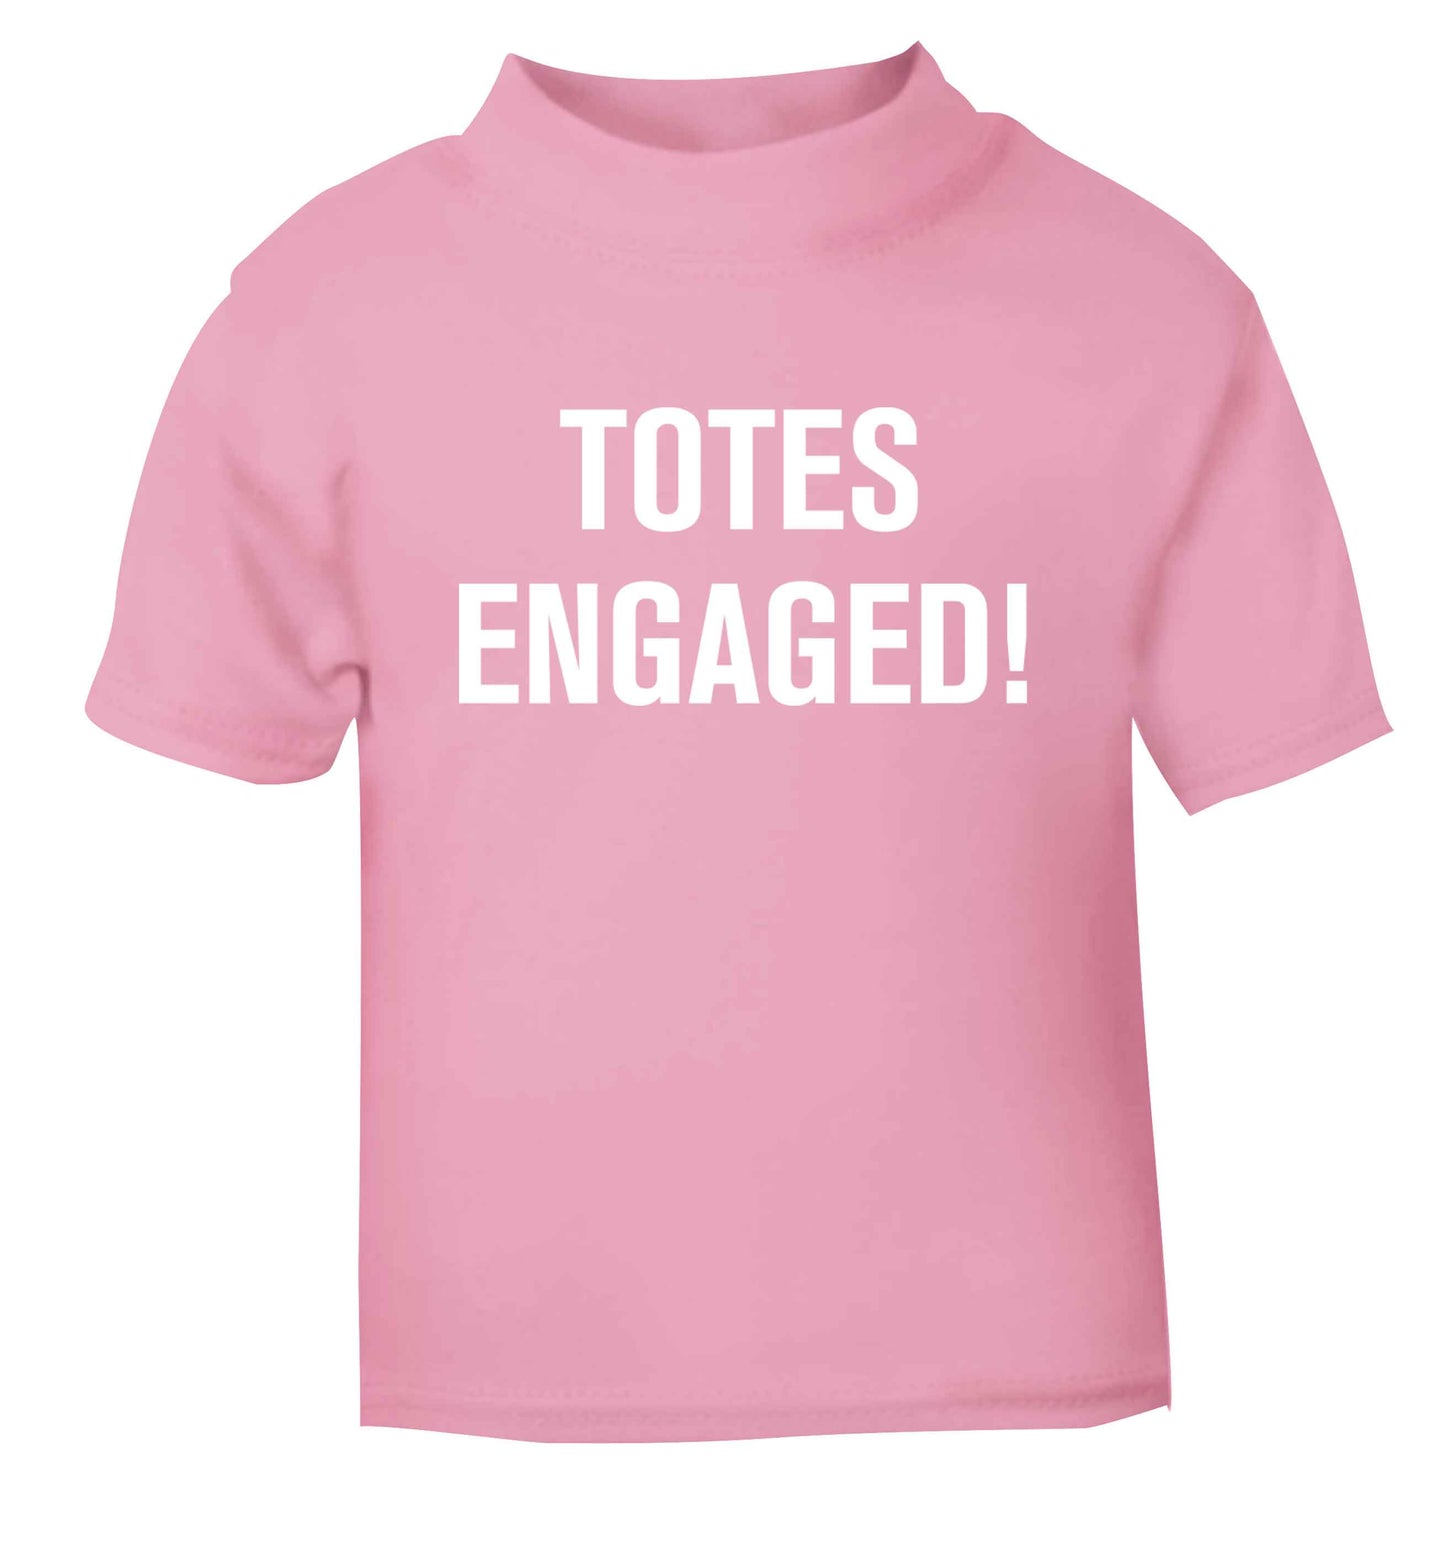 Totes engaged light pink baby toddler Tshirt 2 Years